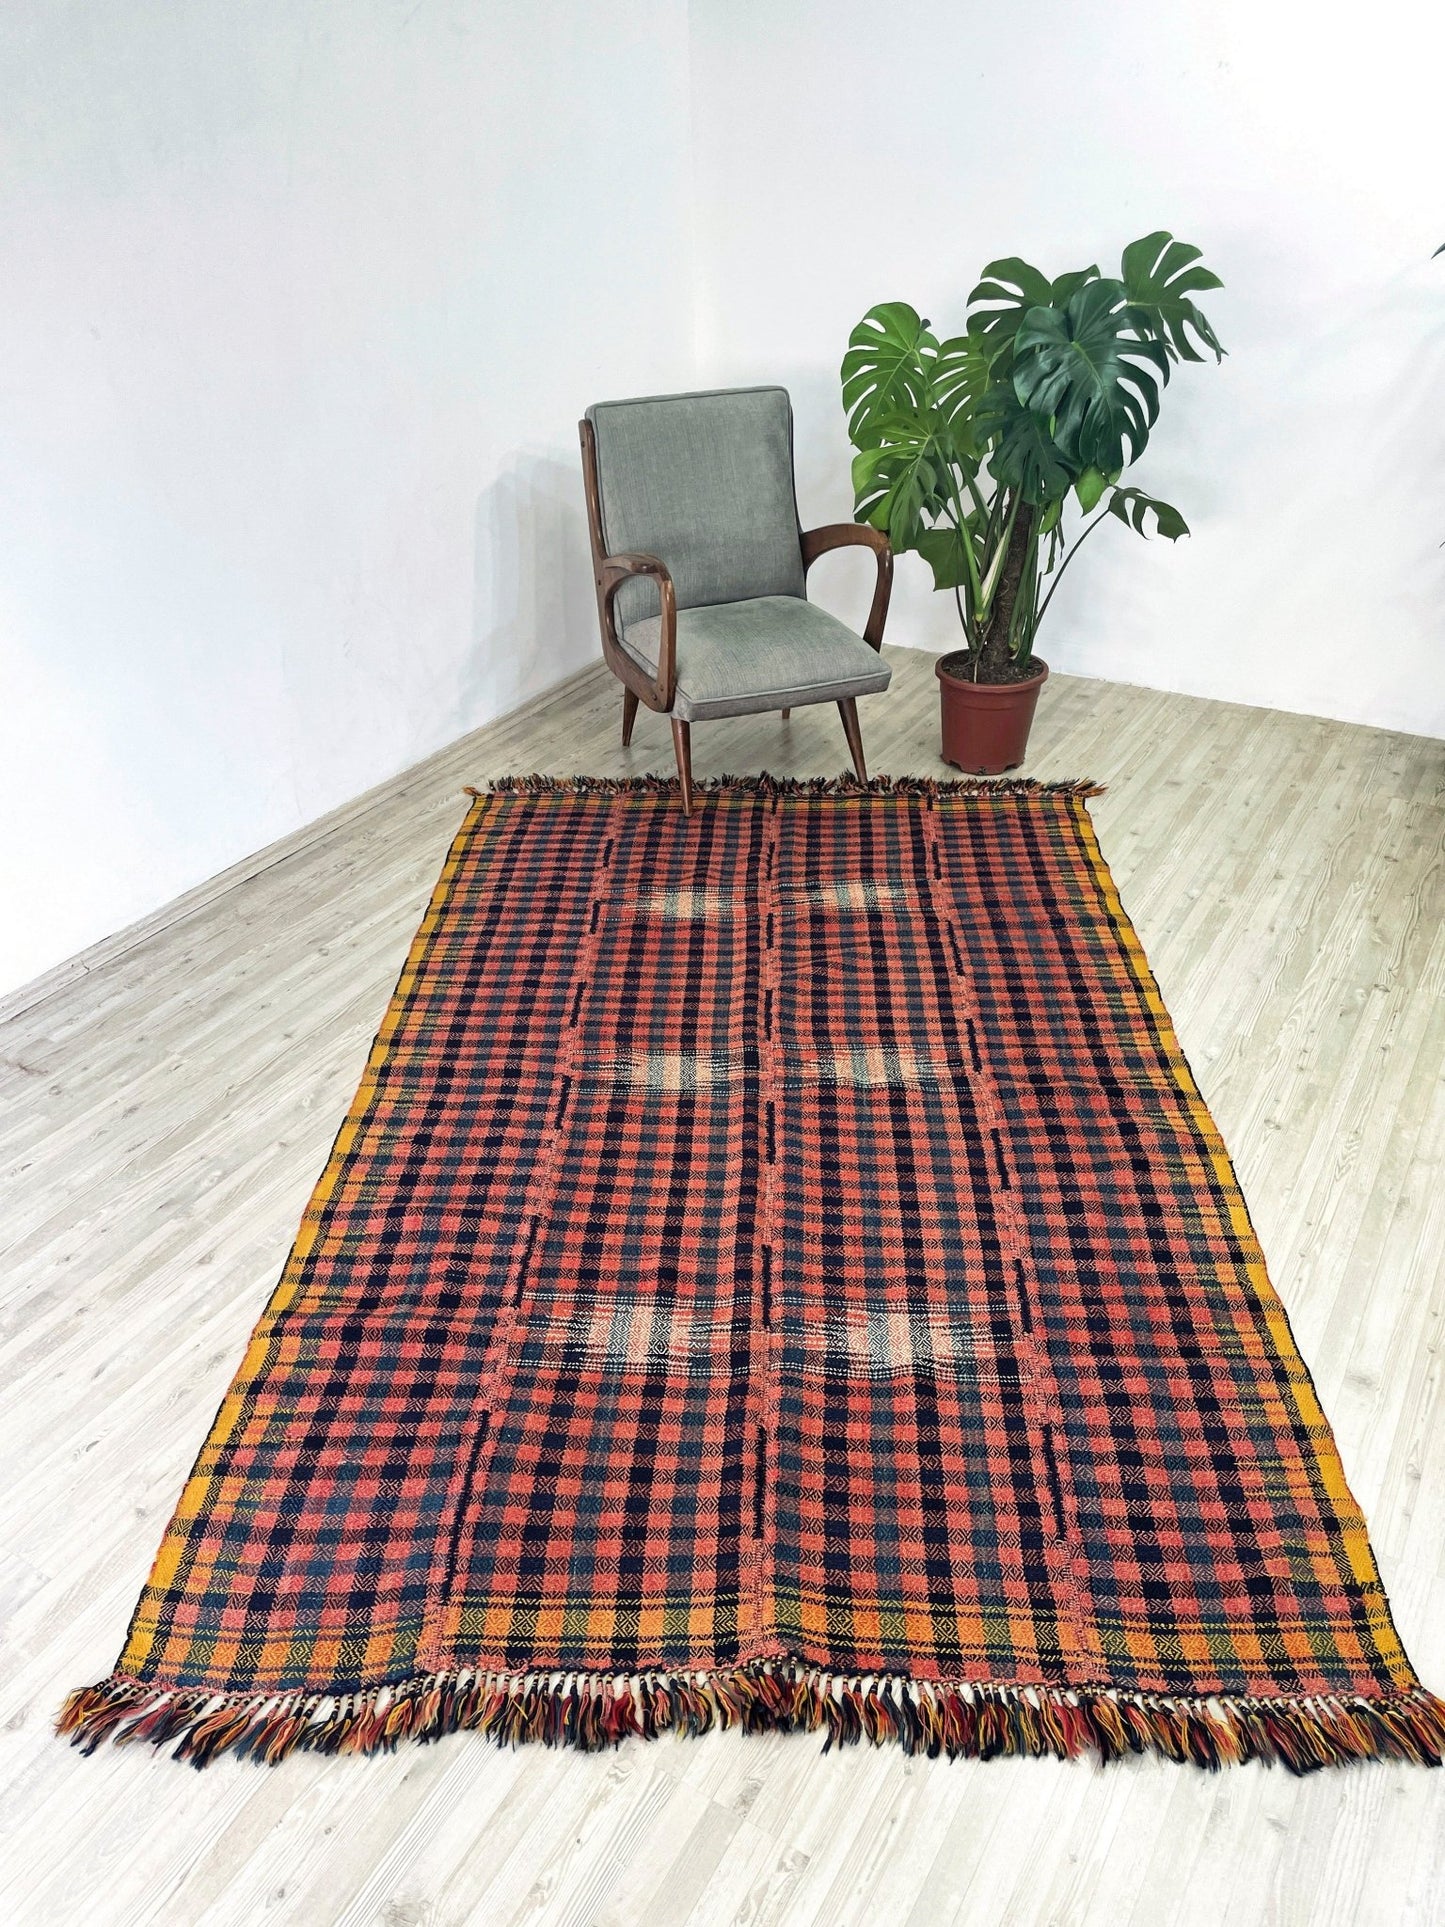 azerbaijani sofra vintage tablecloth blanket dining table kitchen home deco rug shop san francisco palo alto bay area